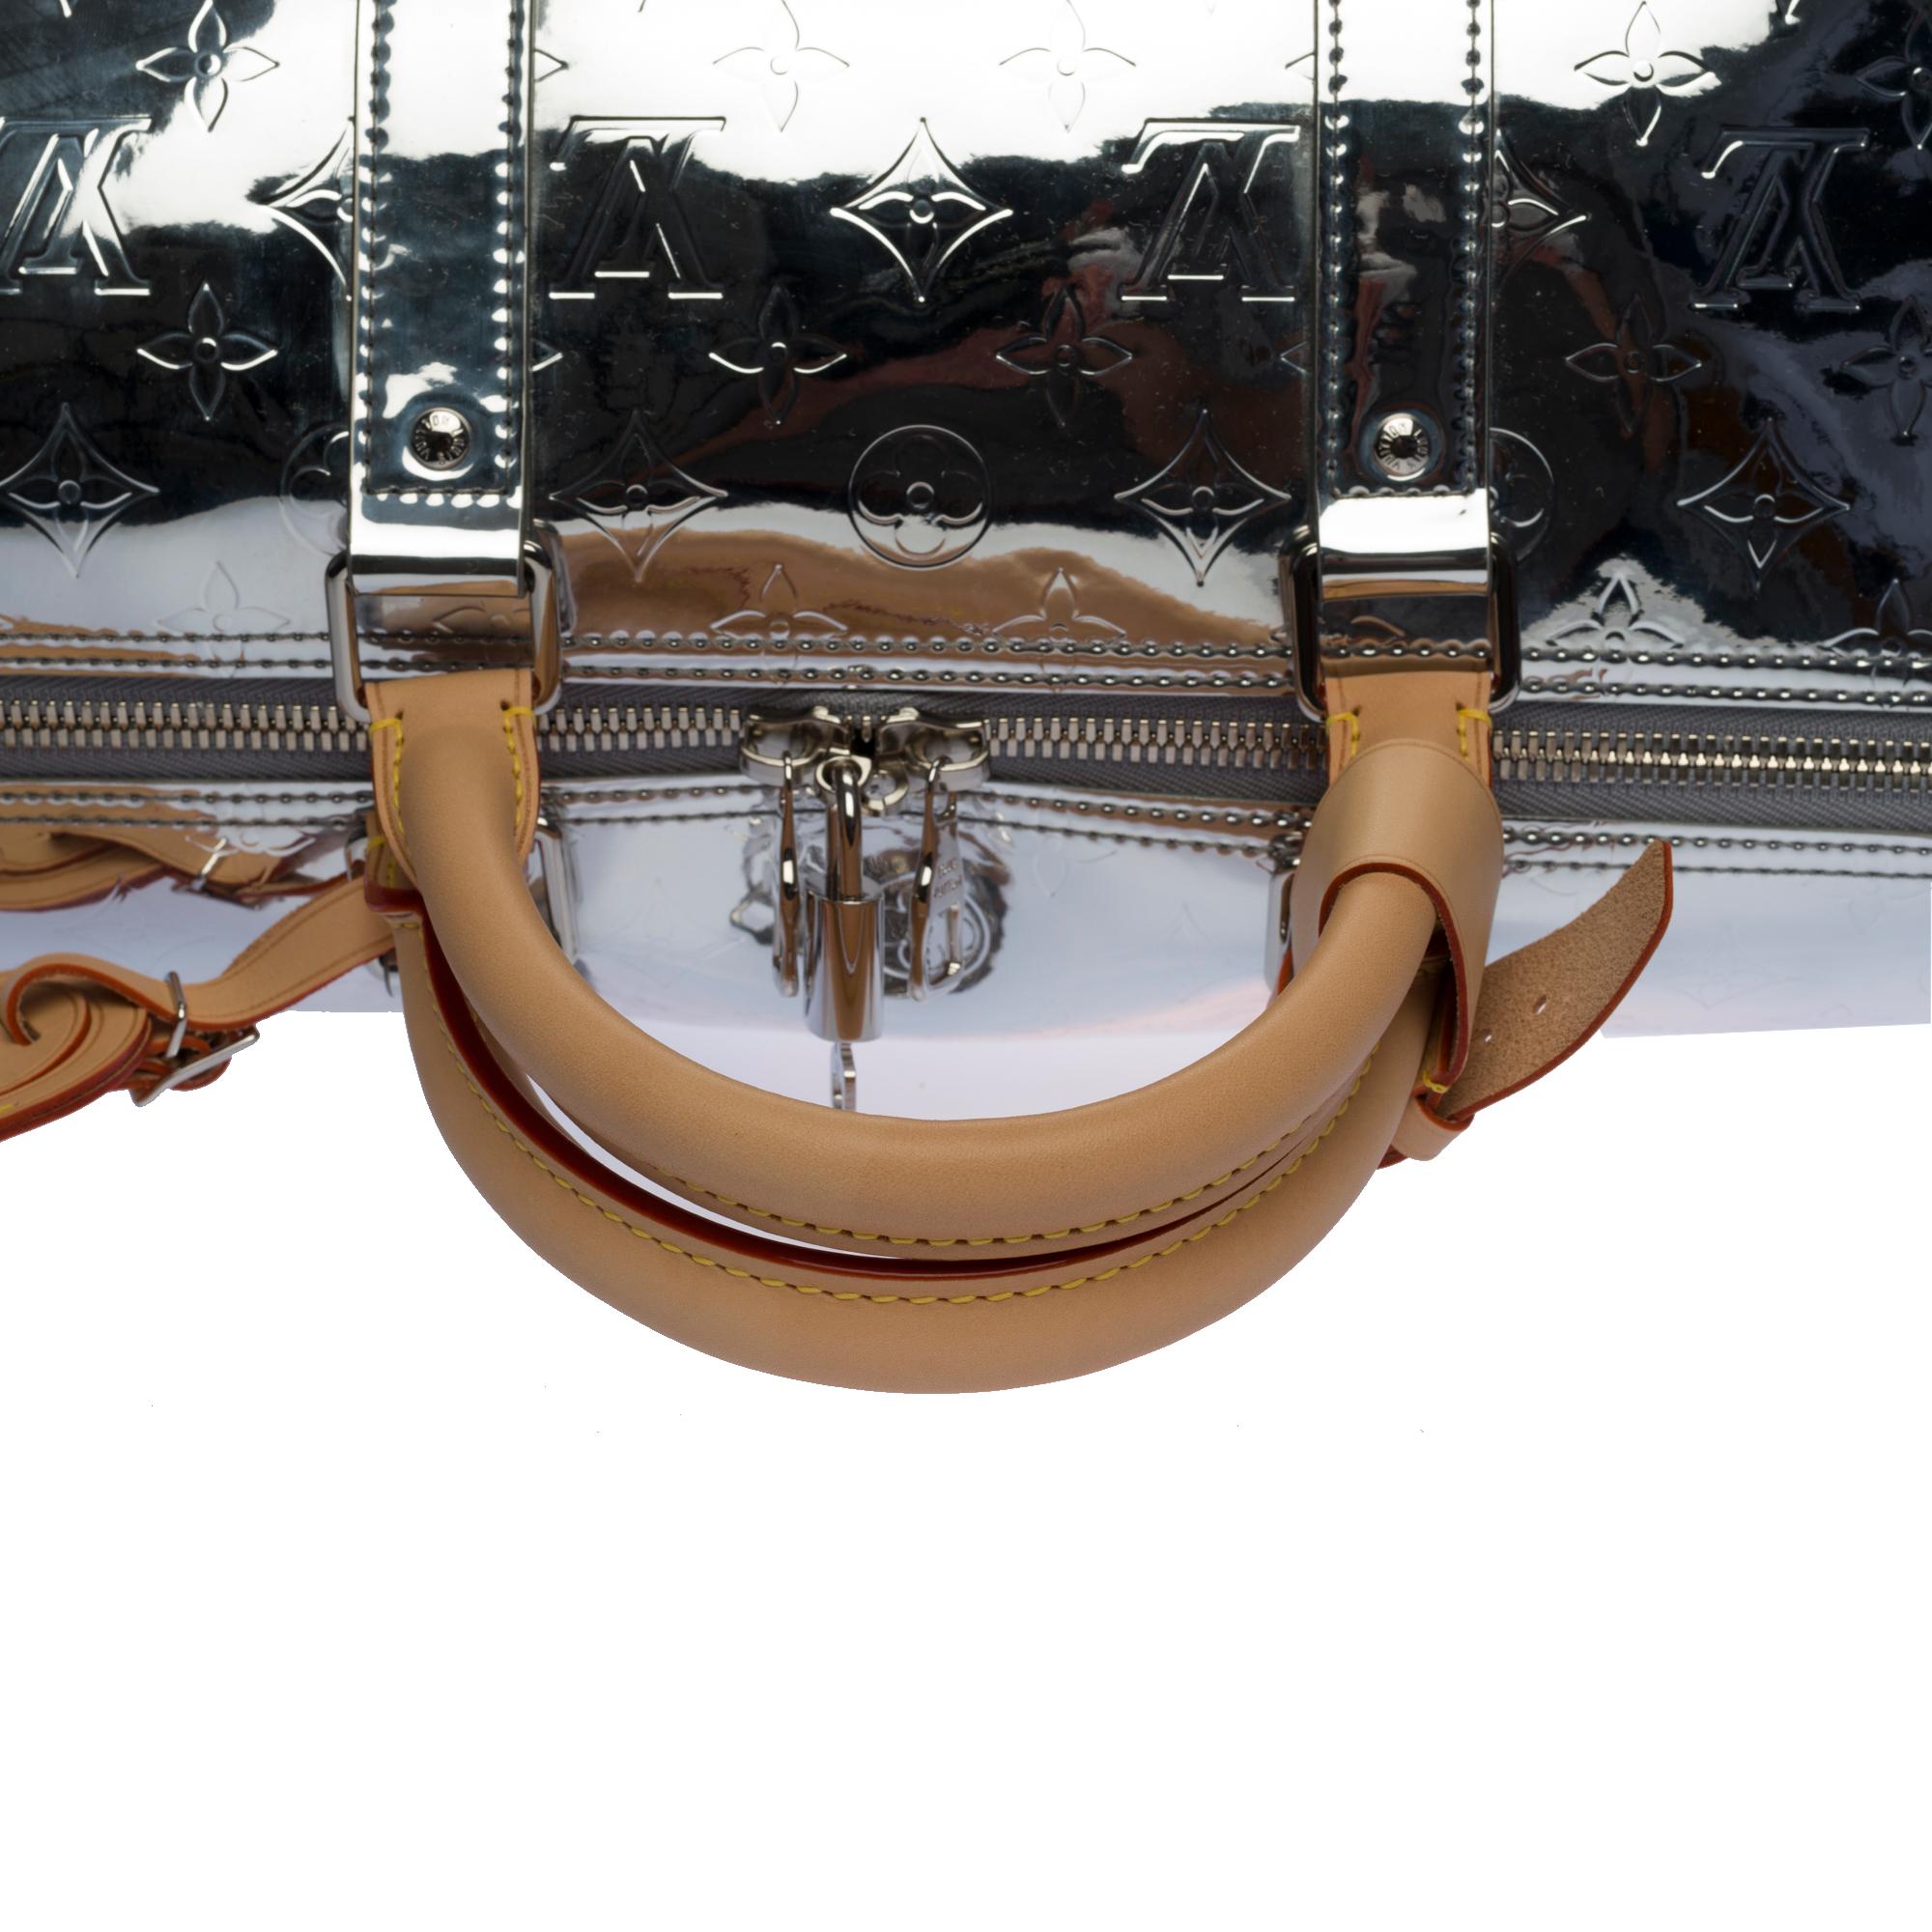 NOUVEAU-FW 2022 Virgil Abloh- Louis Vuitton keepall 50 sac de voyage miroir Mono  en vente 4